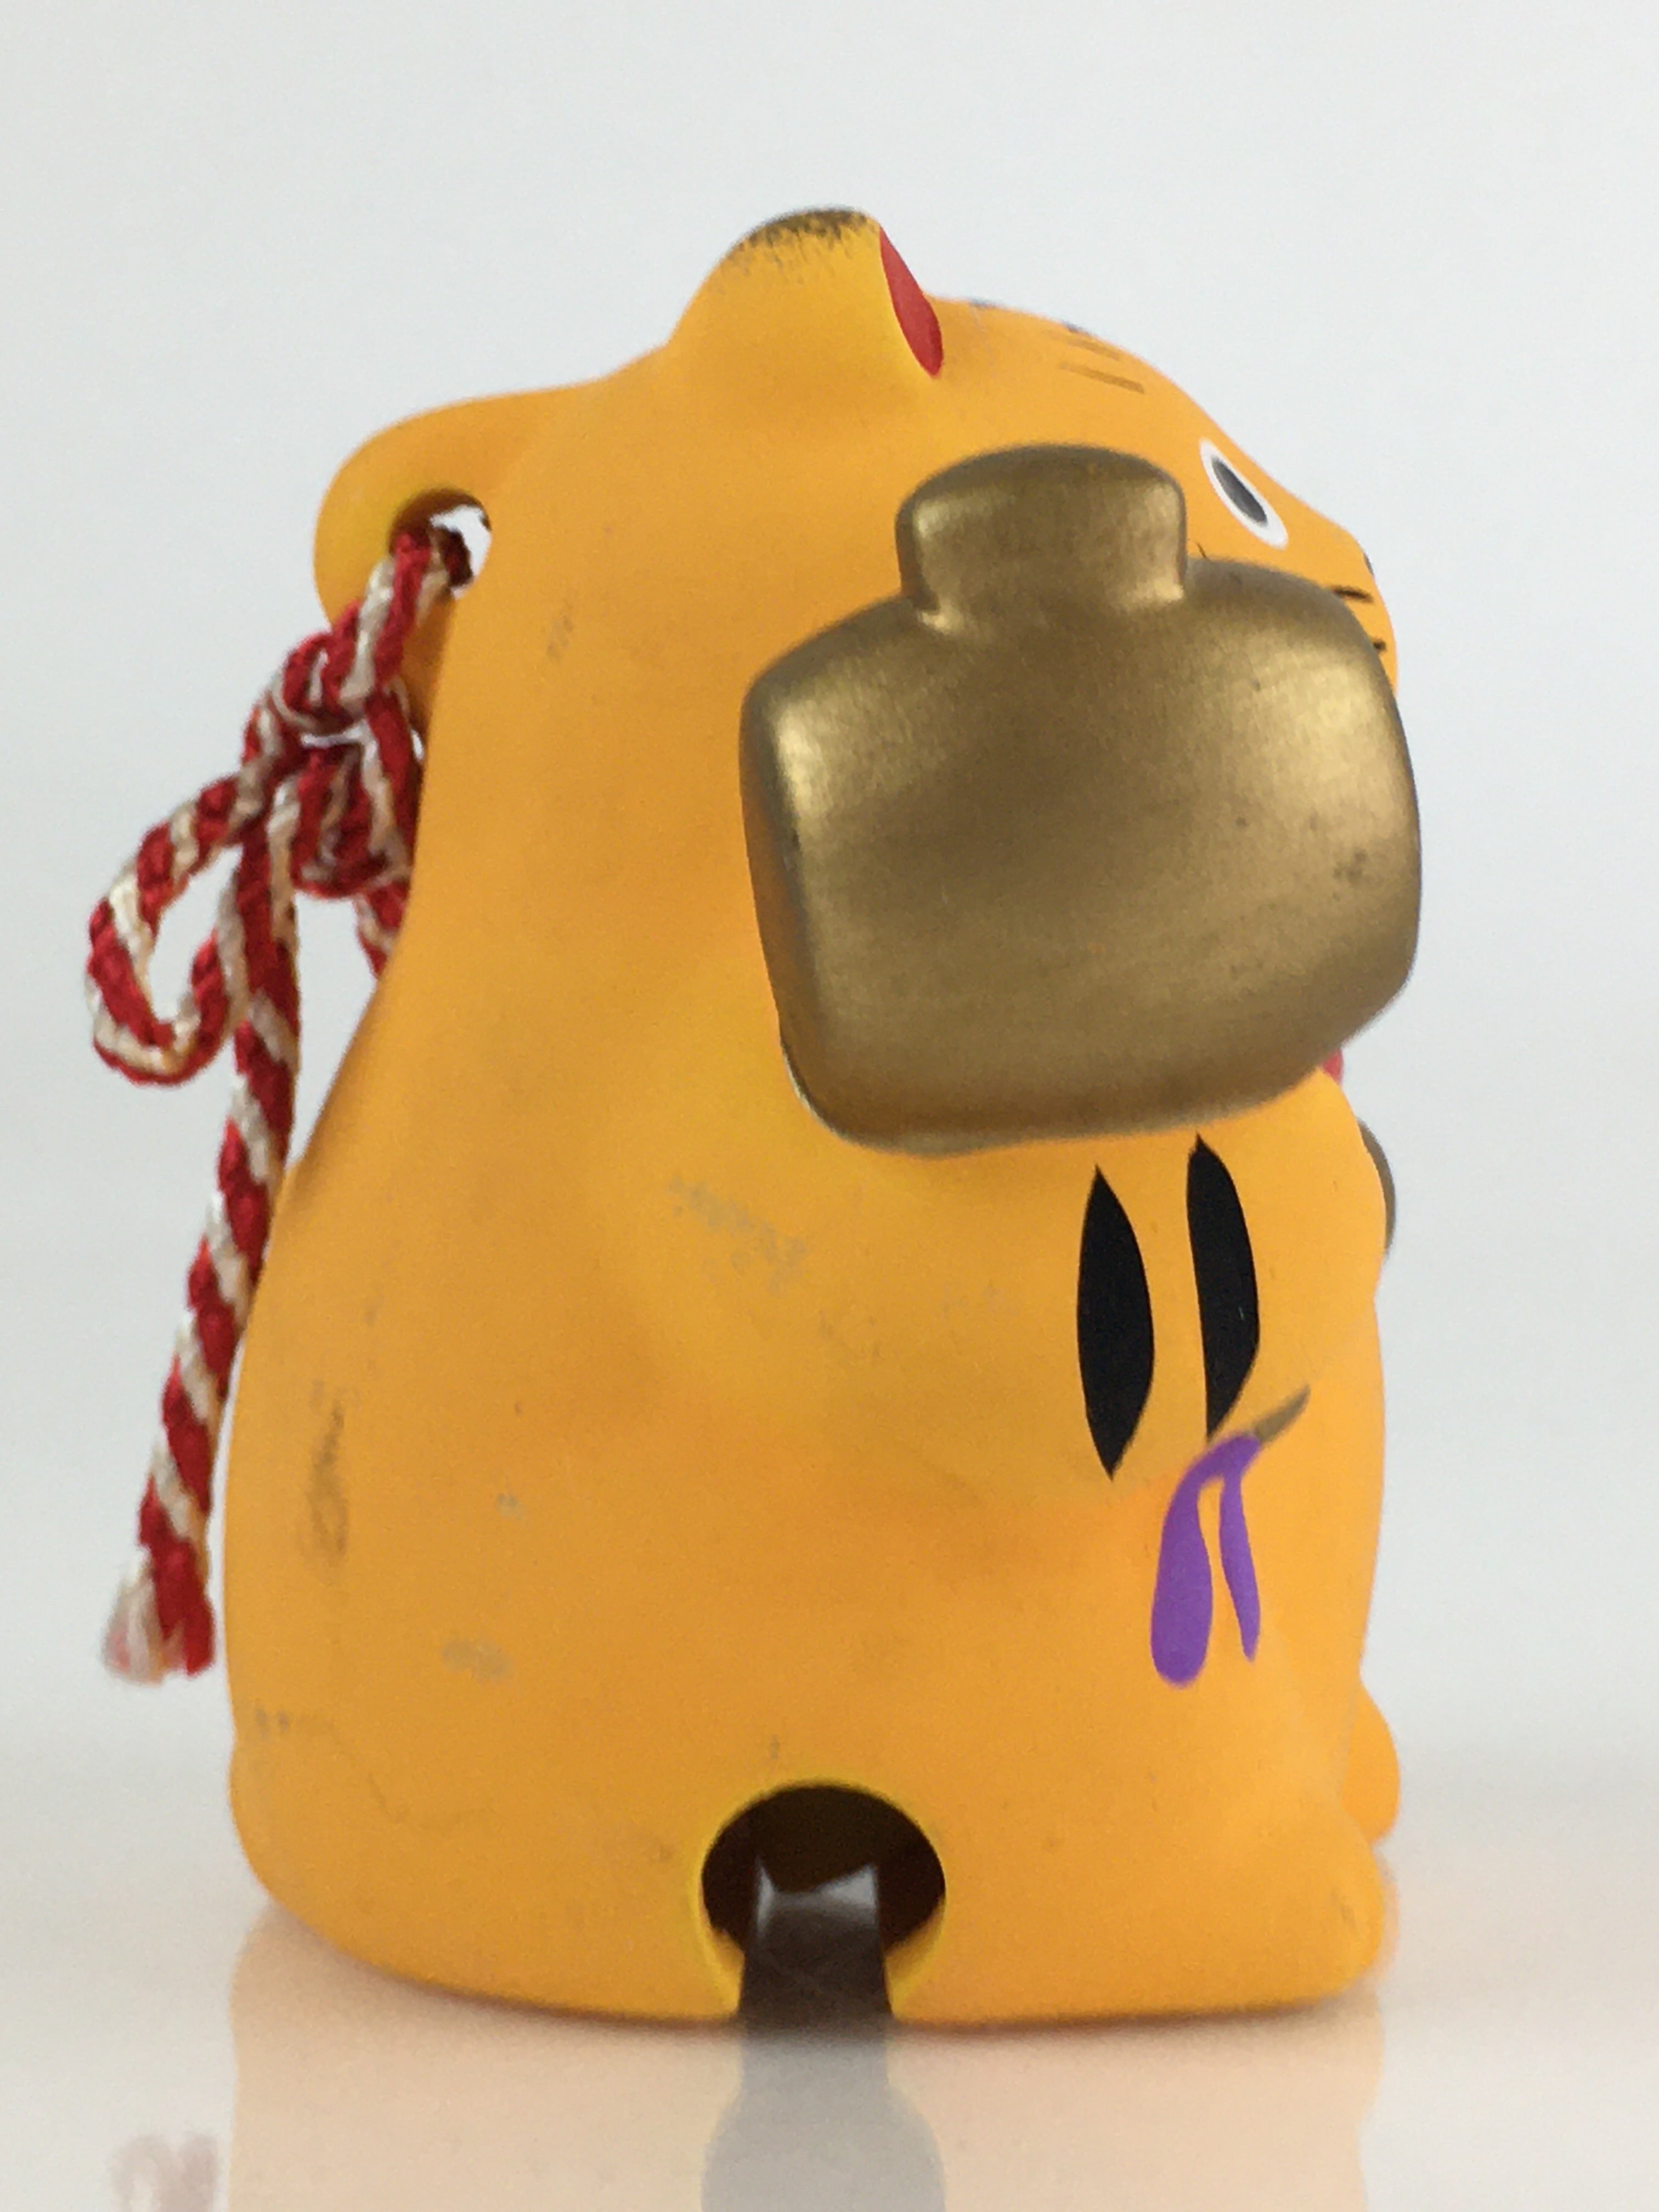 Japanese Clay Bell Vtg Dorei Ceramic Doll Amulet Japanese Zodiac Tiger DR413